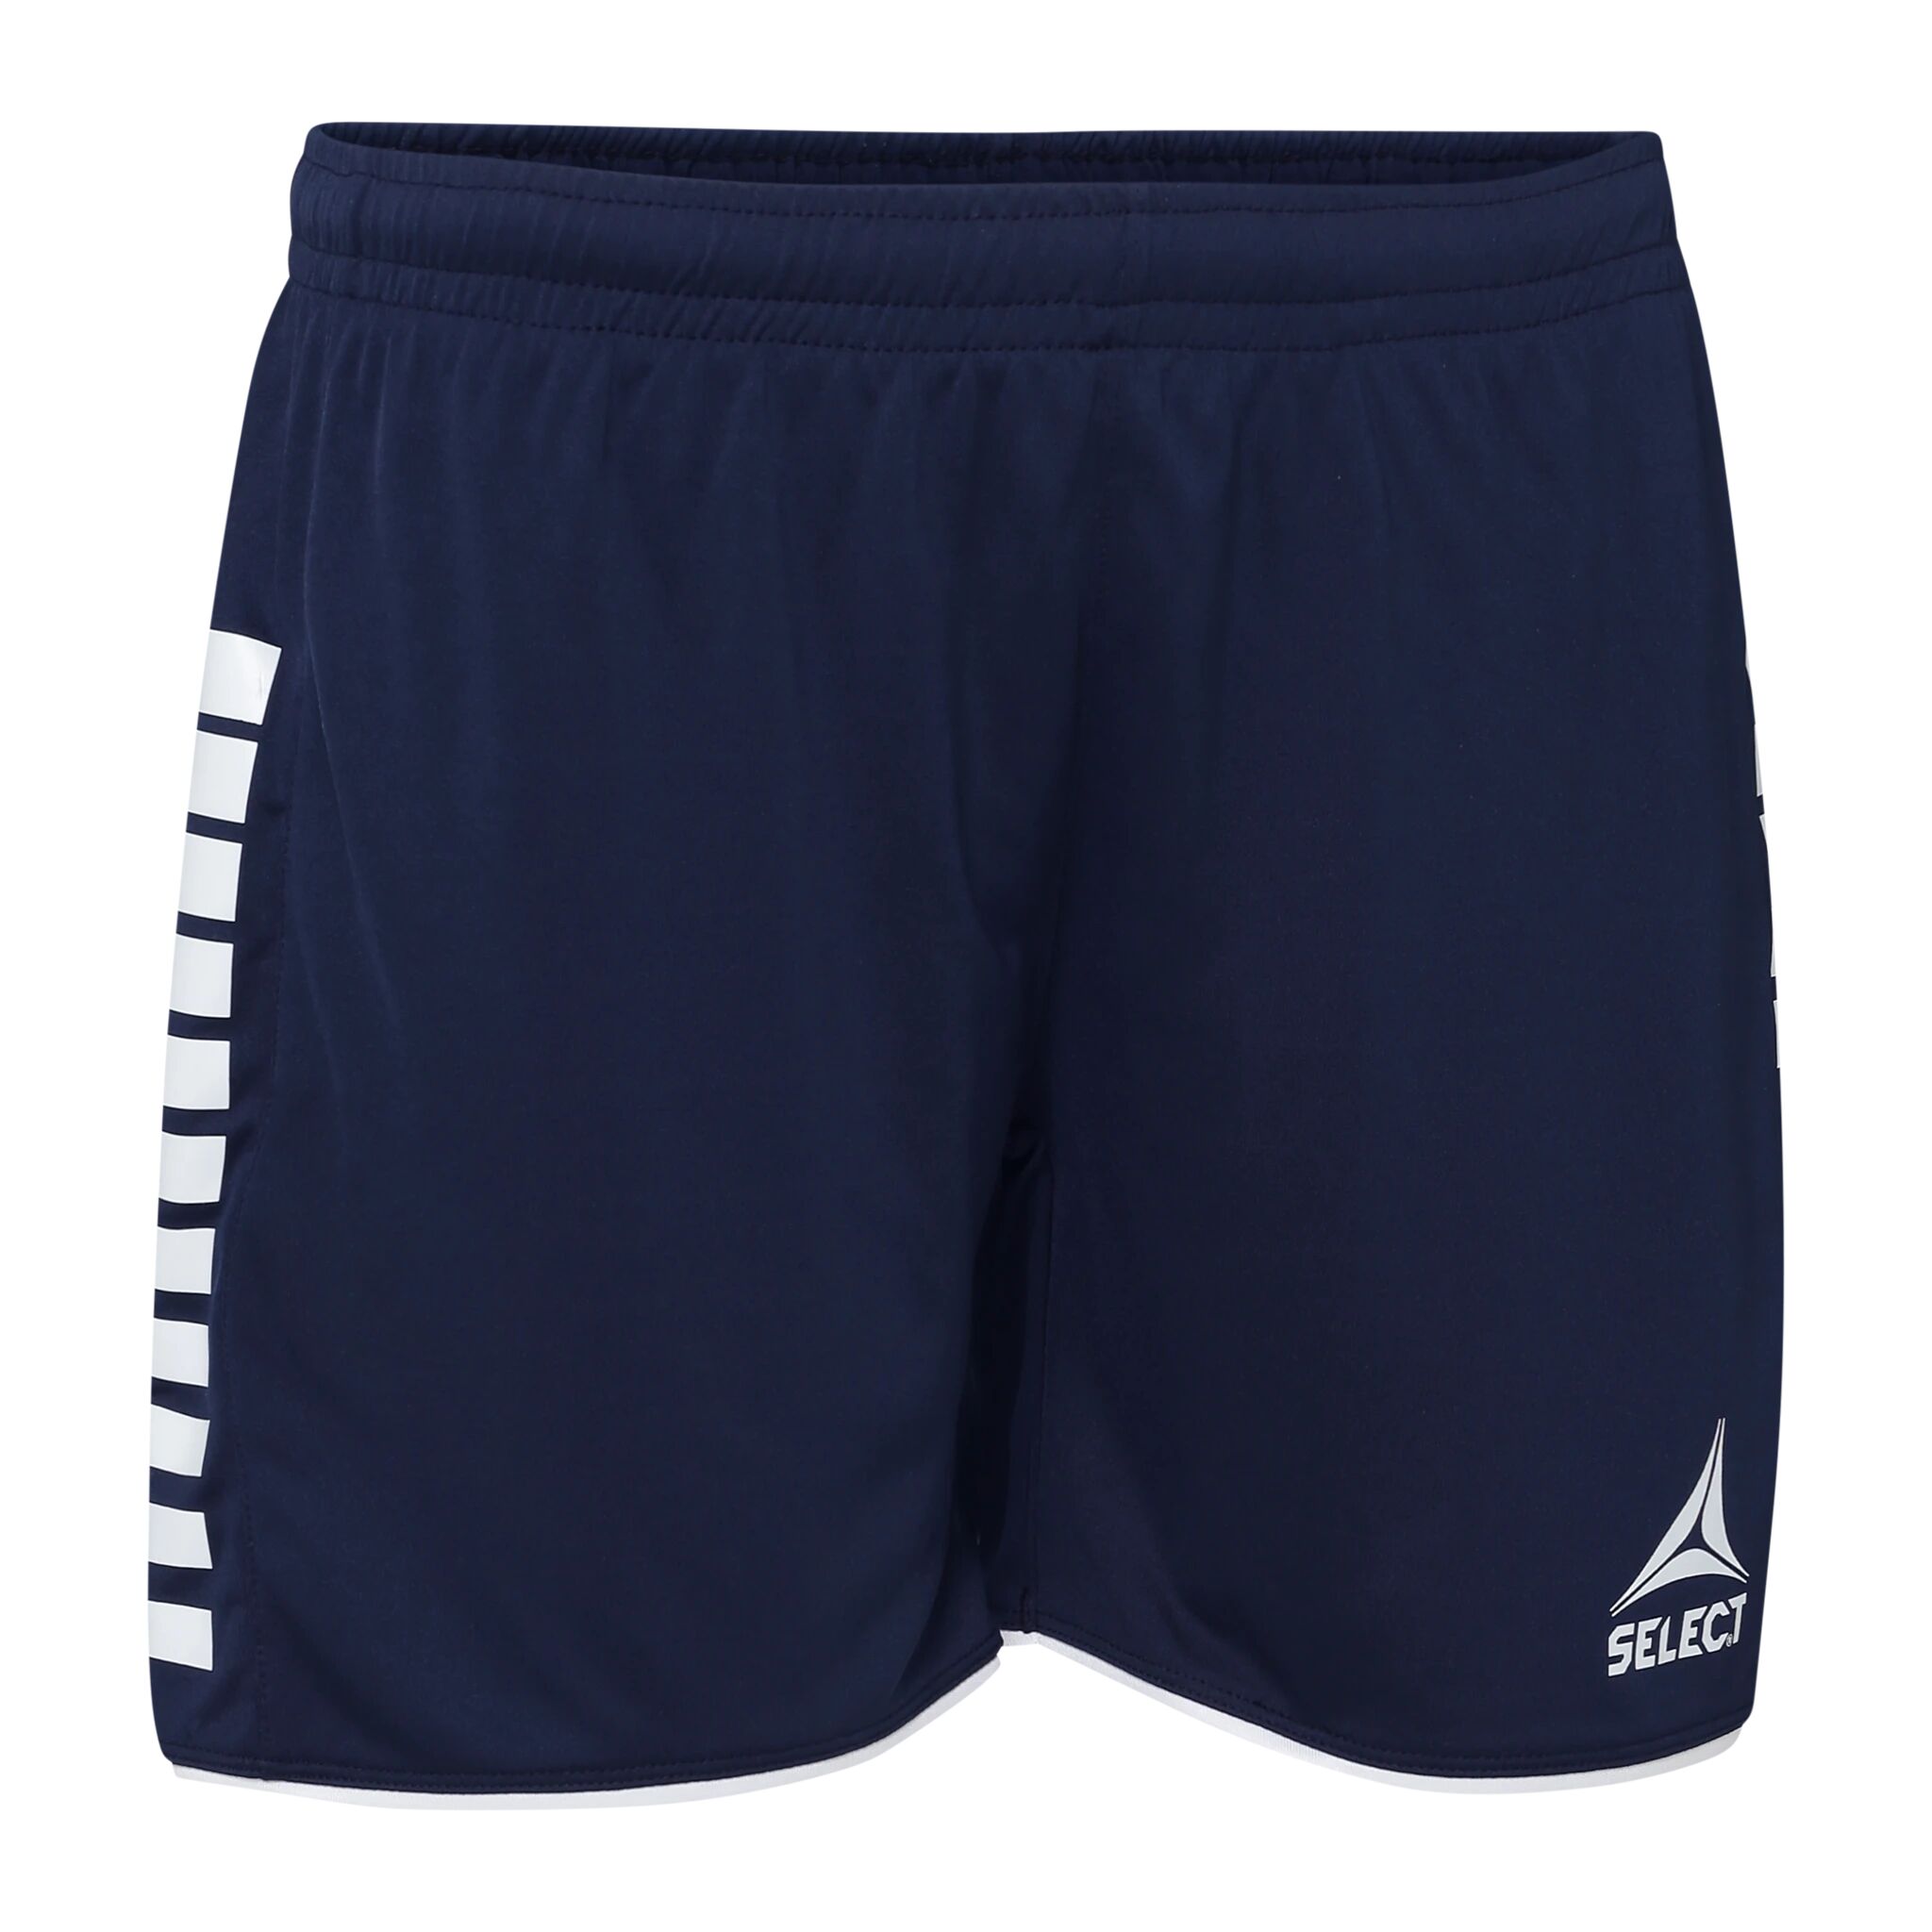 Select Player shorts Argentina, shorts dame L navy